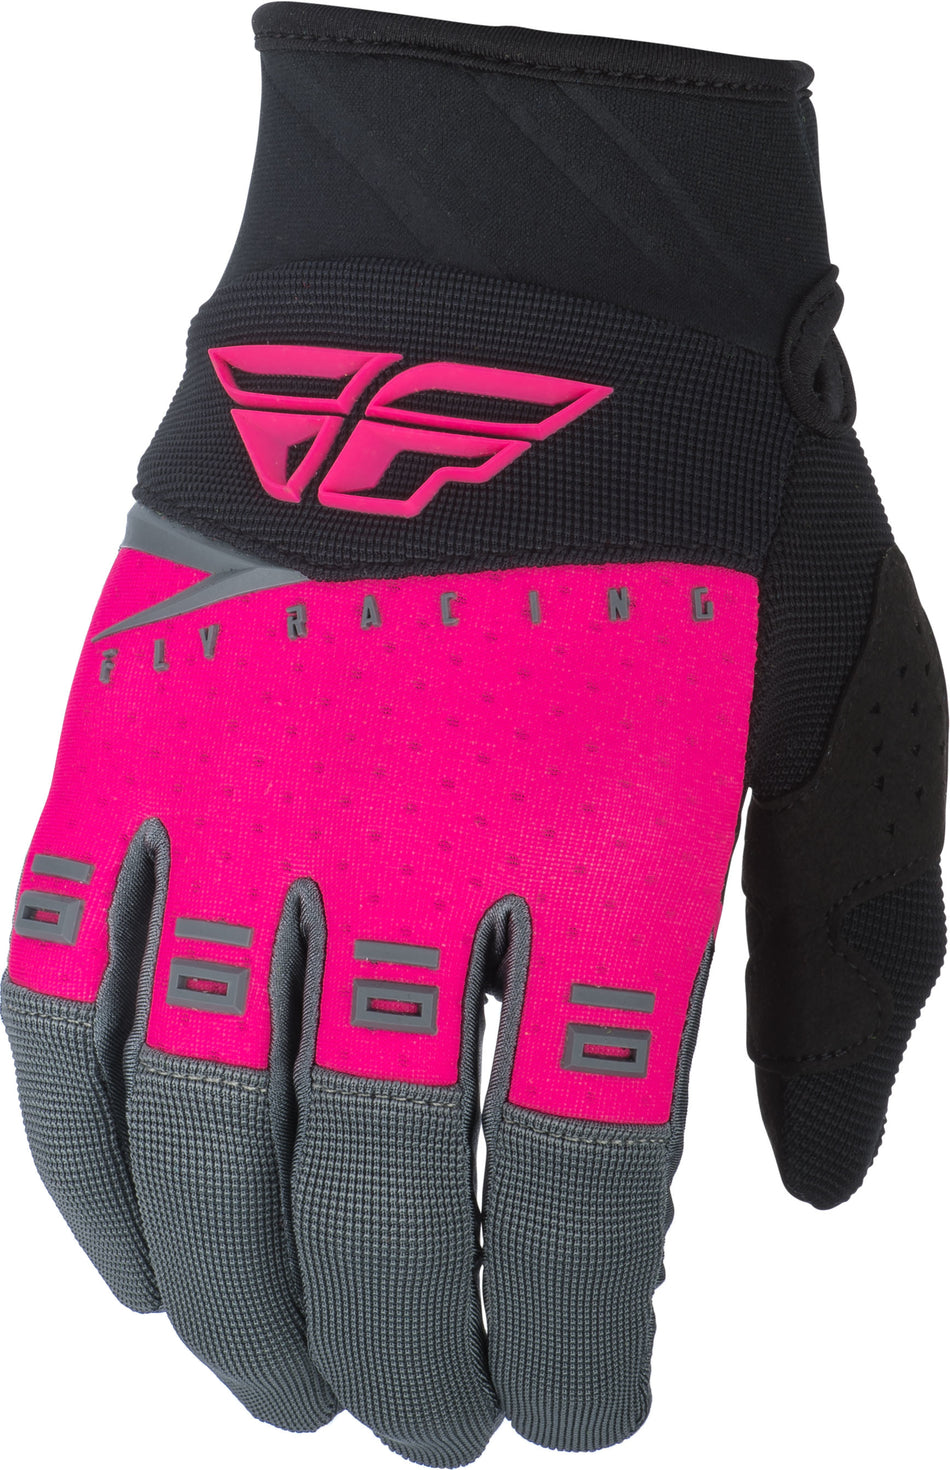 FLY RACING F-16 Gloves Neon Pink/Black/Grey Sz 10 372-91810